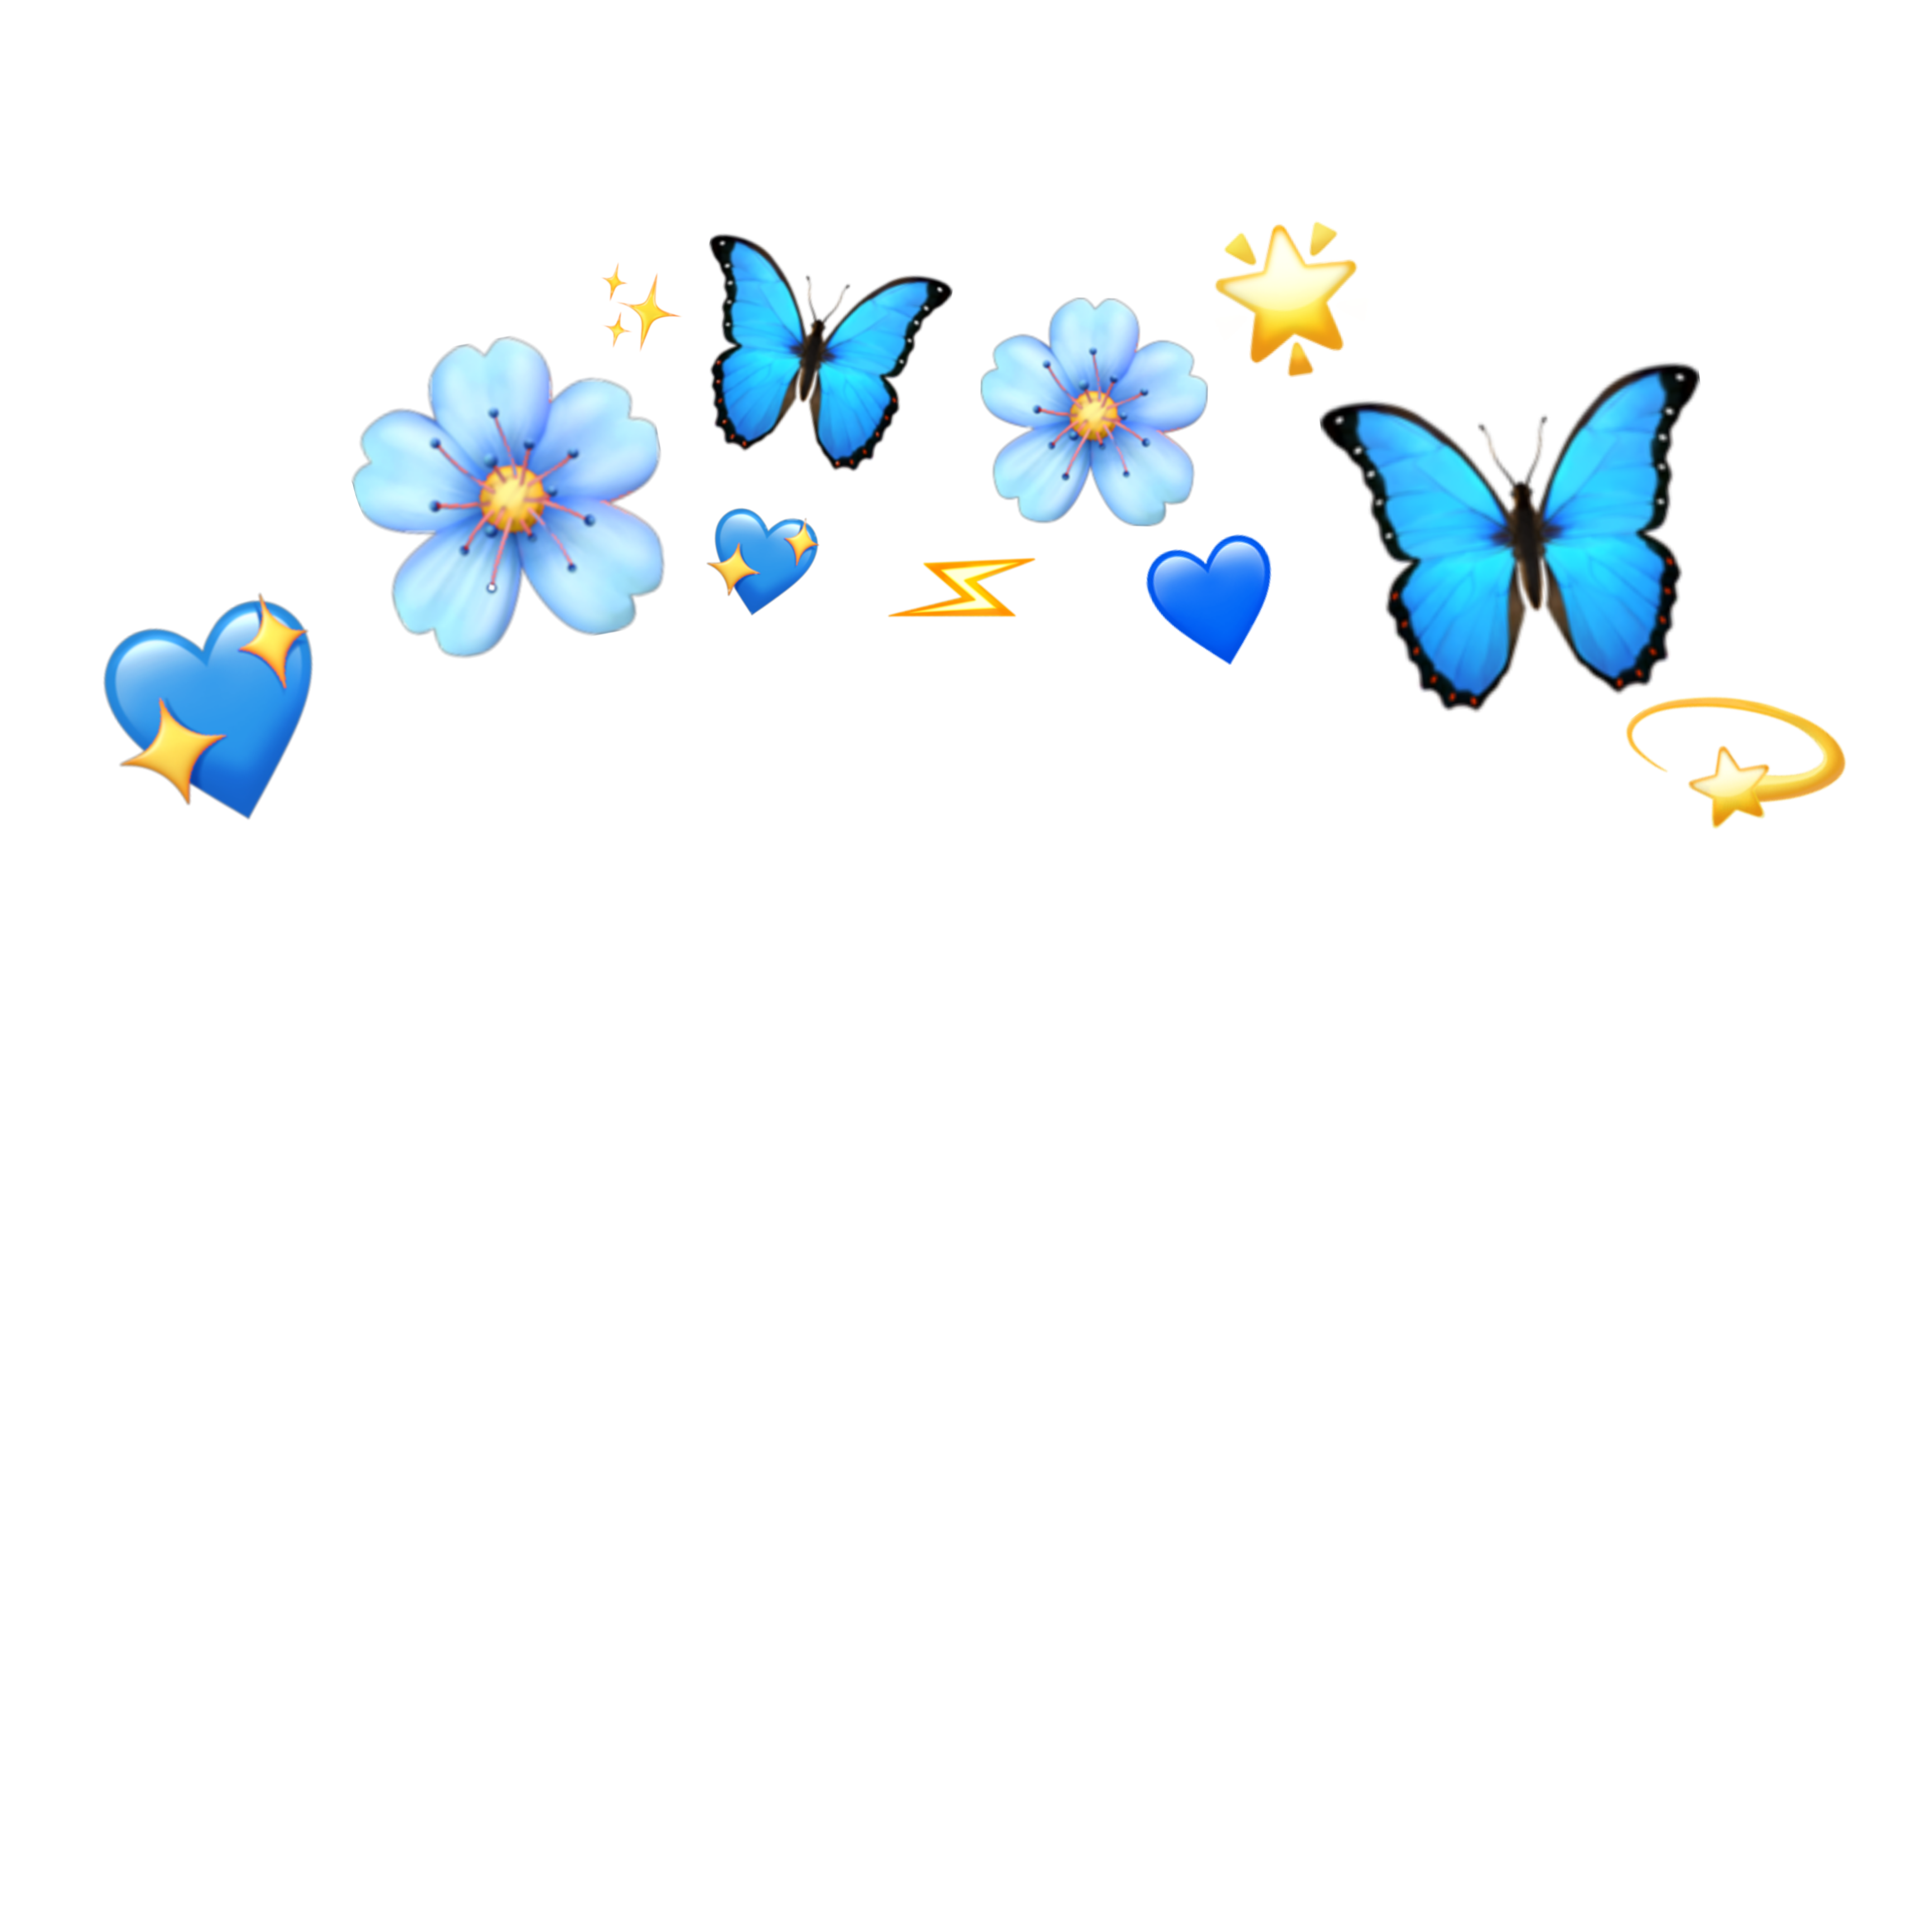 Бабочки над головой. Голубая бабочка на прозрачном фоне. Цветы и бабочки на прозрачном фоне. Бабочки цветочки на прозрачном фоне. Бабочка над головой